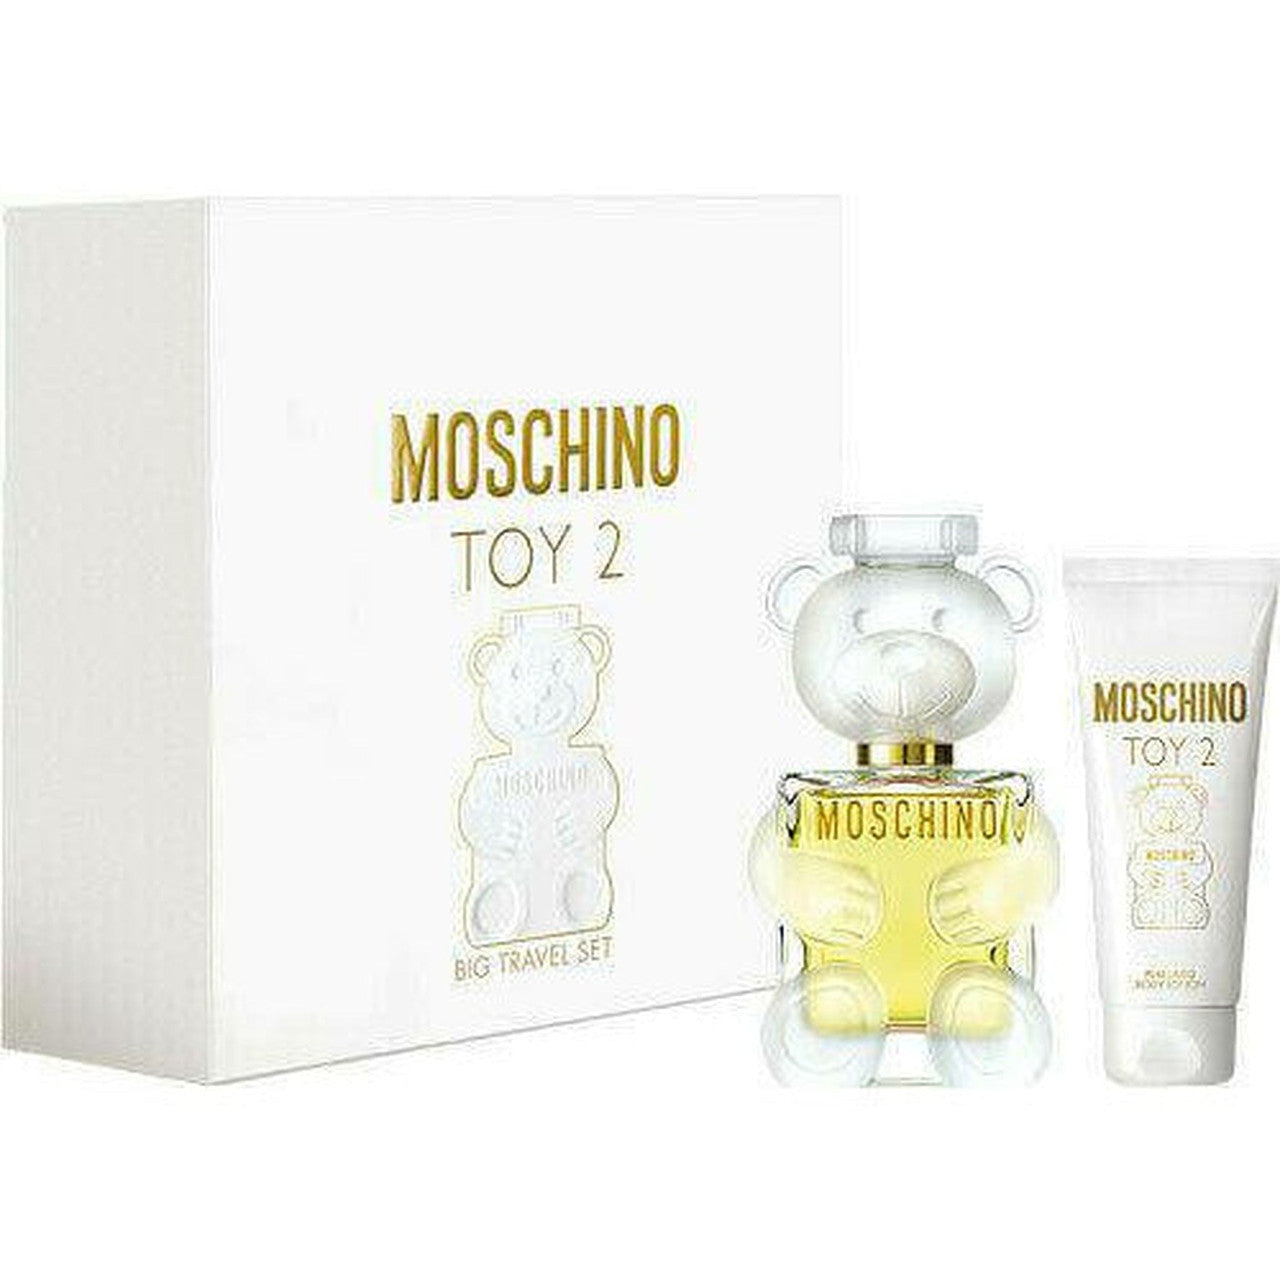 Moschino Toy 2 Gift Set 30ml EDP + 50ml Body Lotion